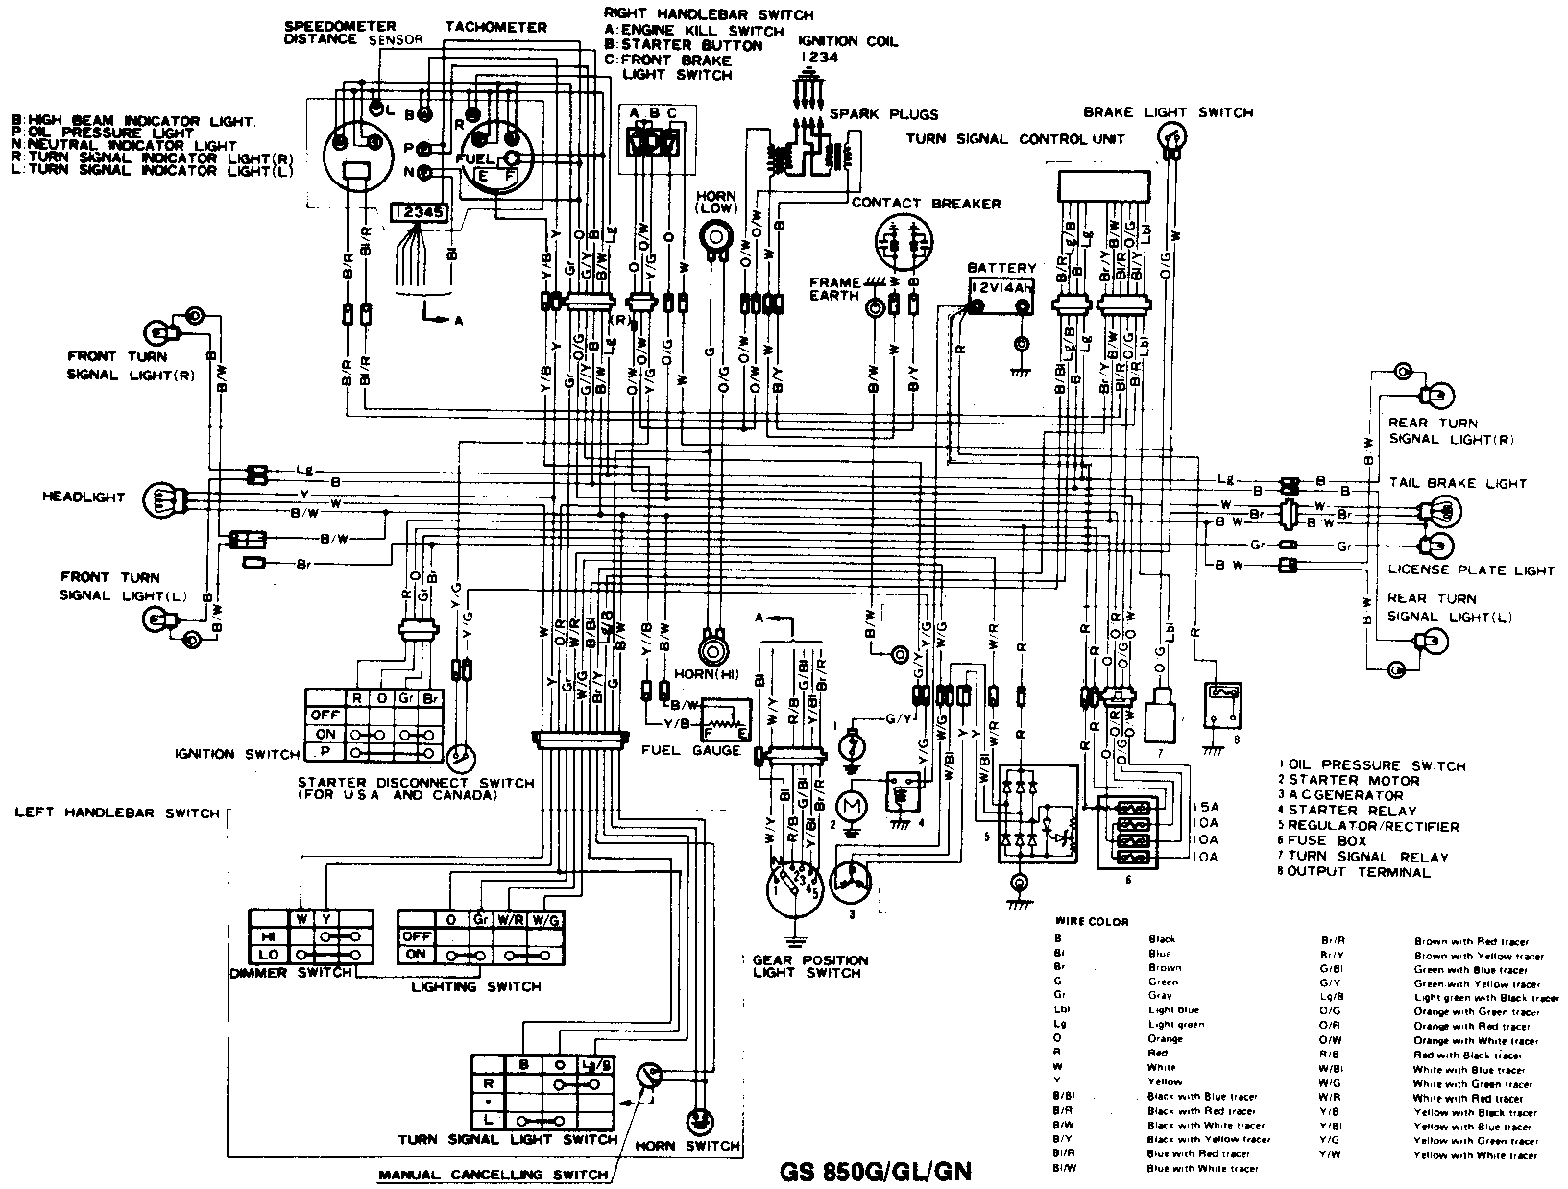 1982 Suzuki Gs550L Wiring Diagram from smokeriders.com